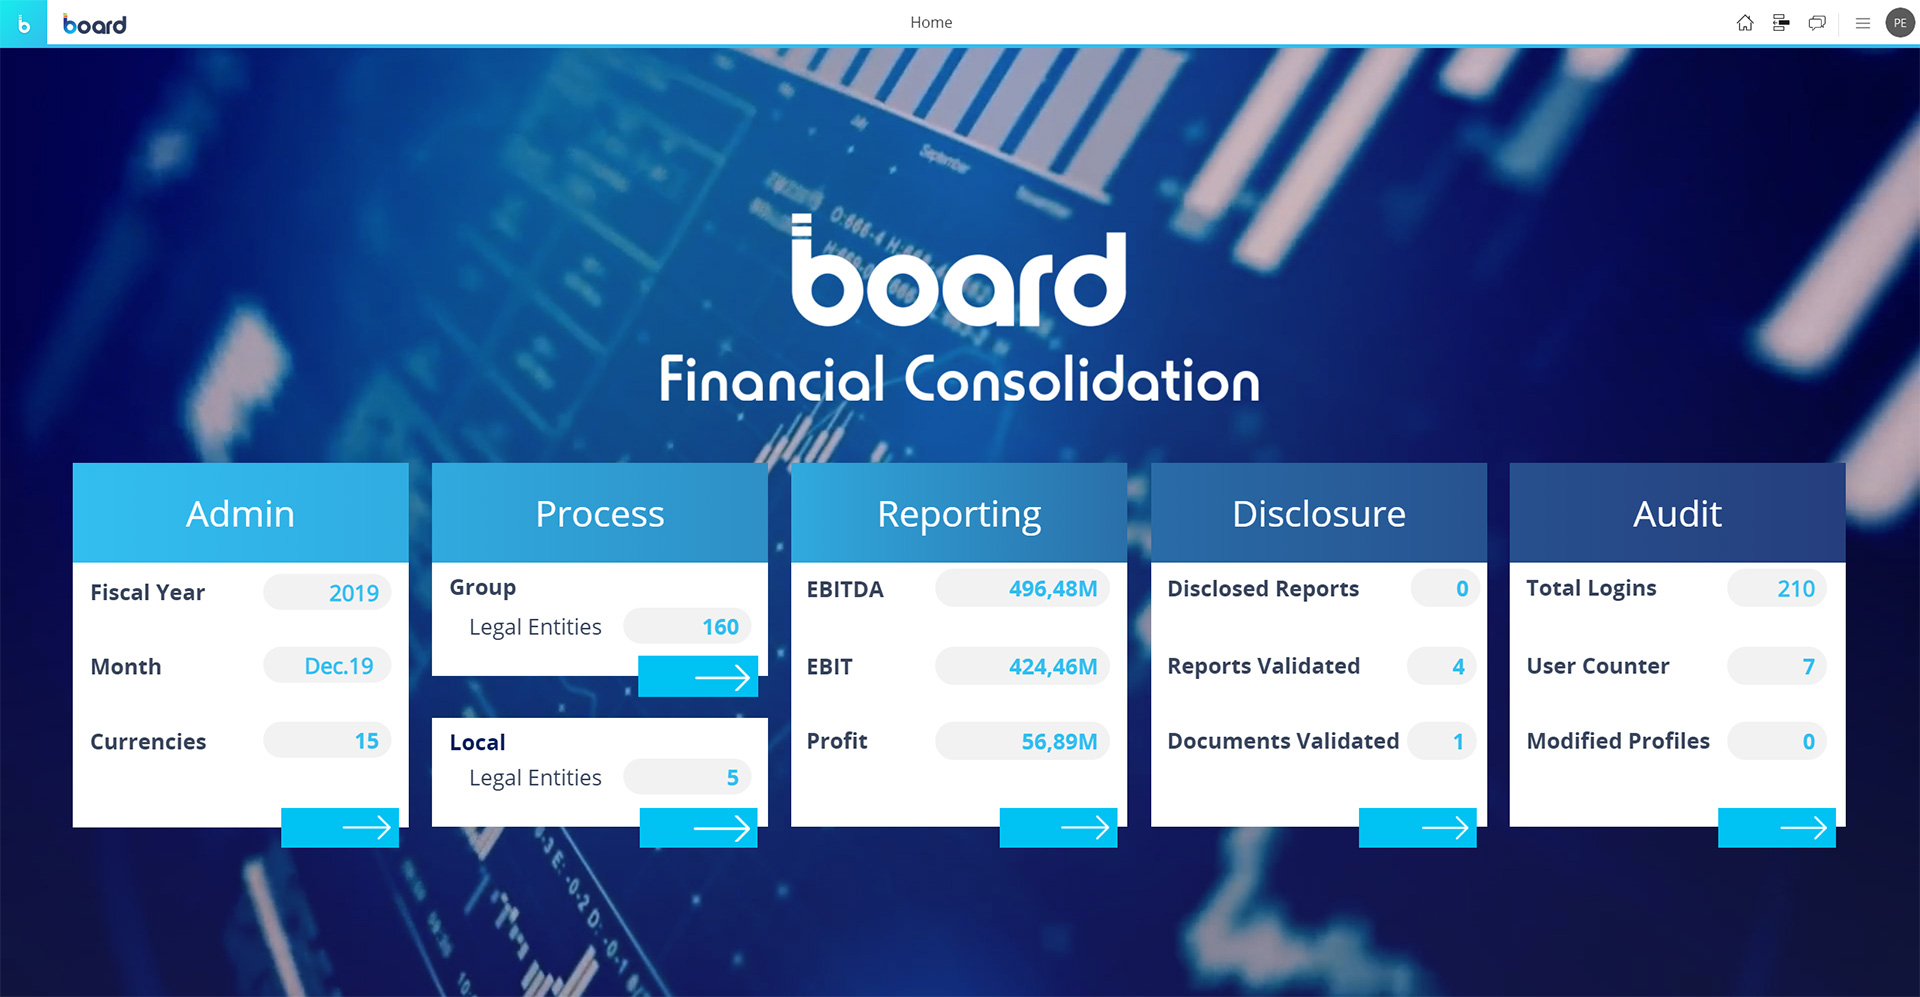 Board Financial Consolidation